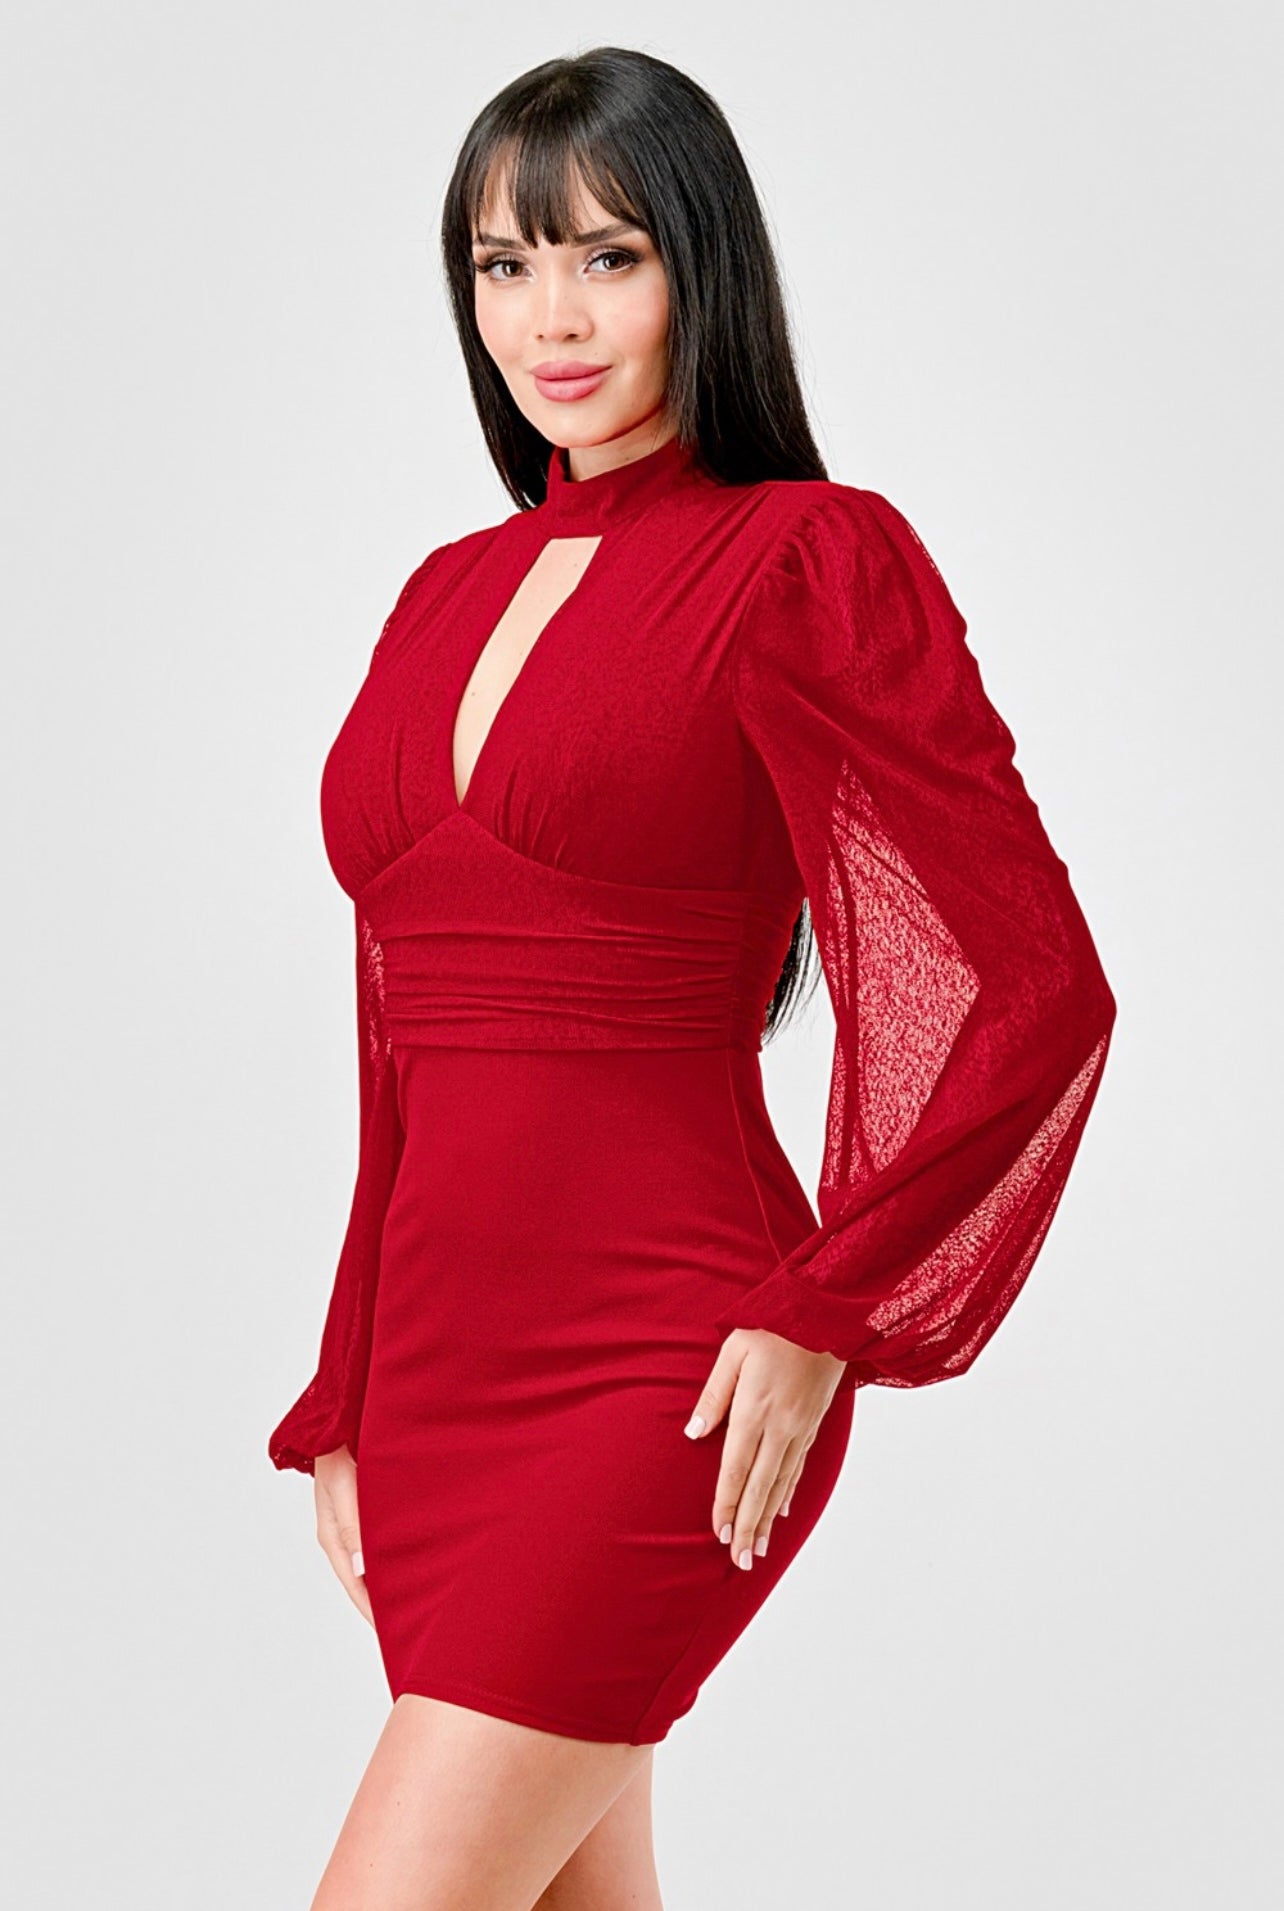 Scarlet Mini Dress (Red)